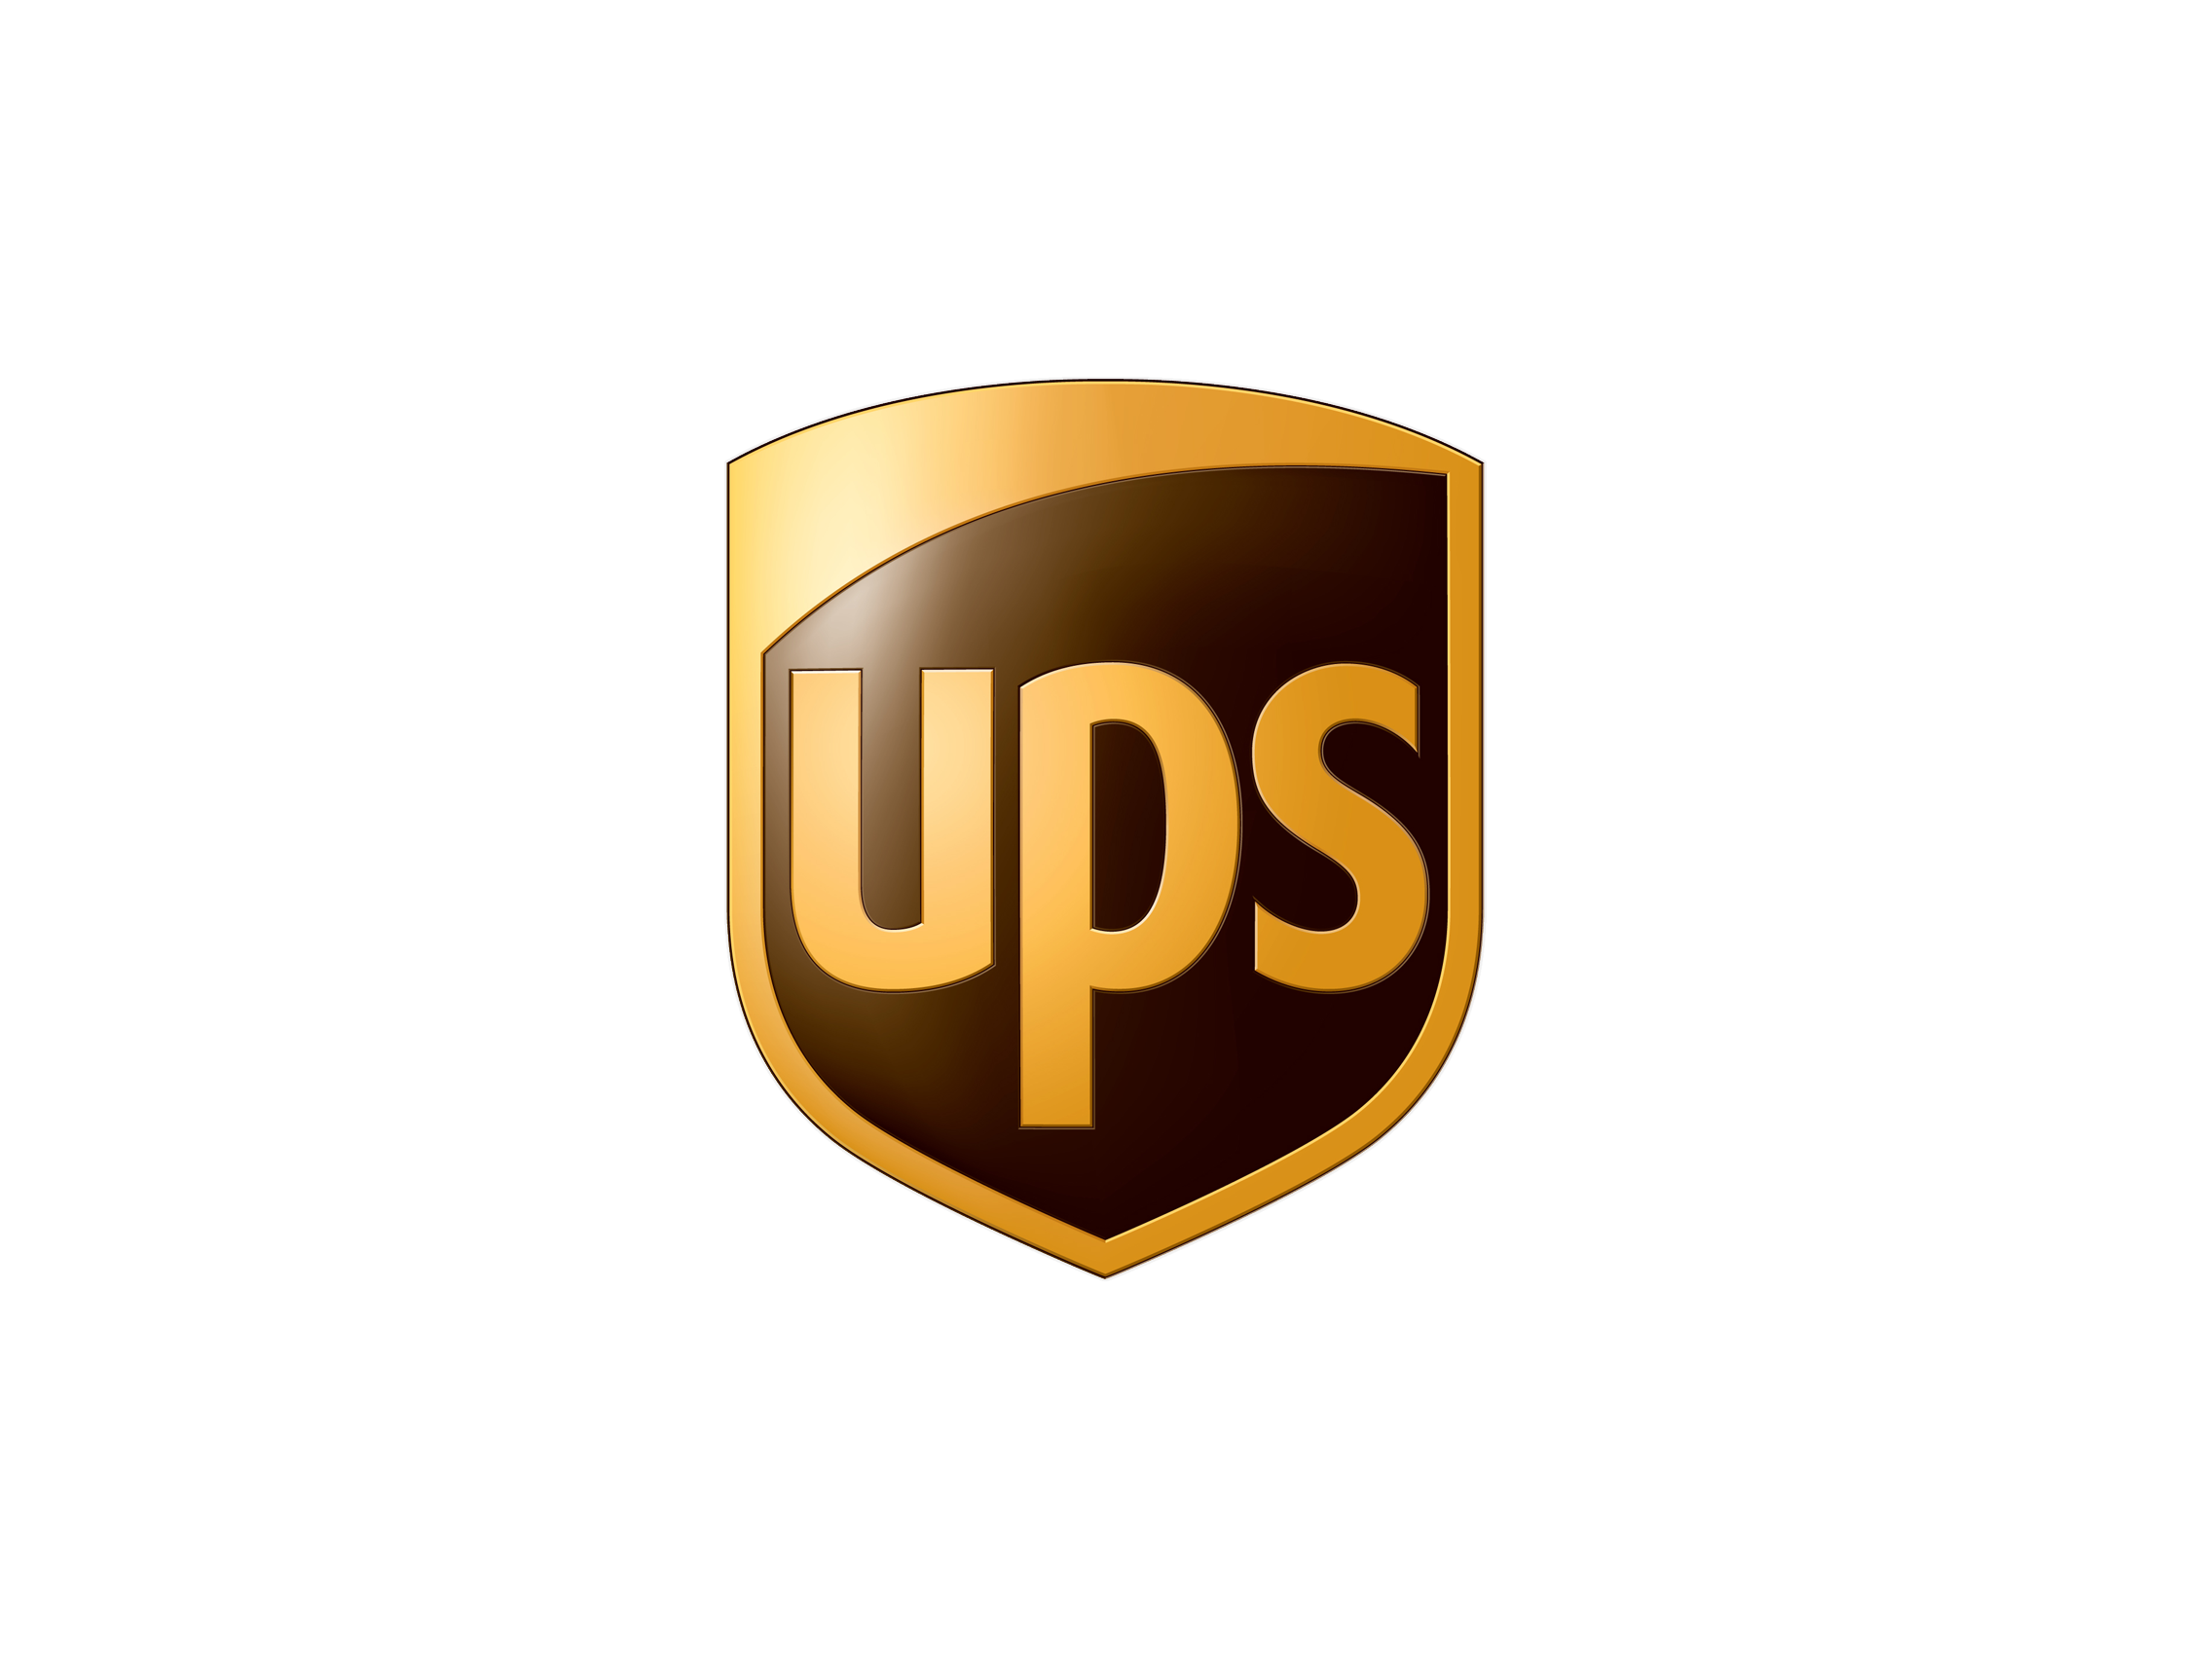 UPS (UNITED PARCEL SERVICE)